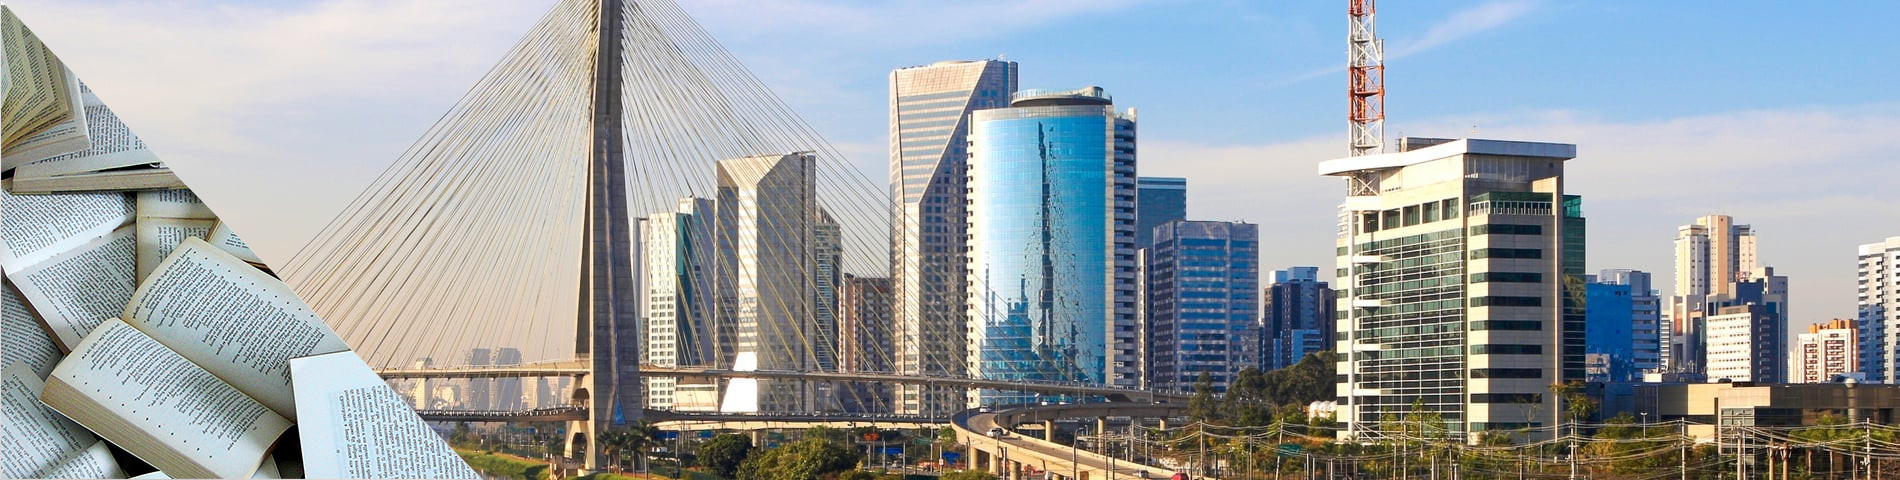 Sao Paulo - Superintensivt (+35 t)